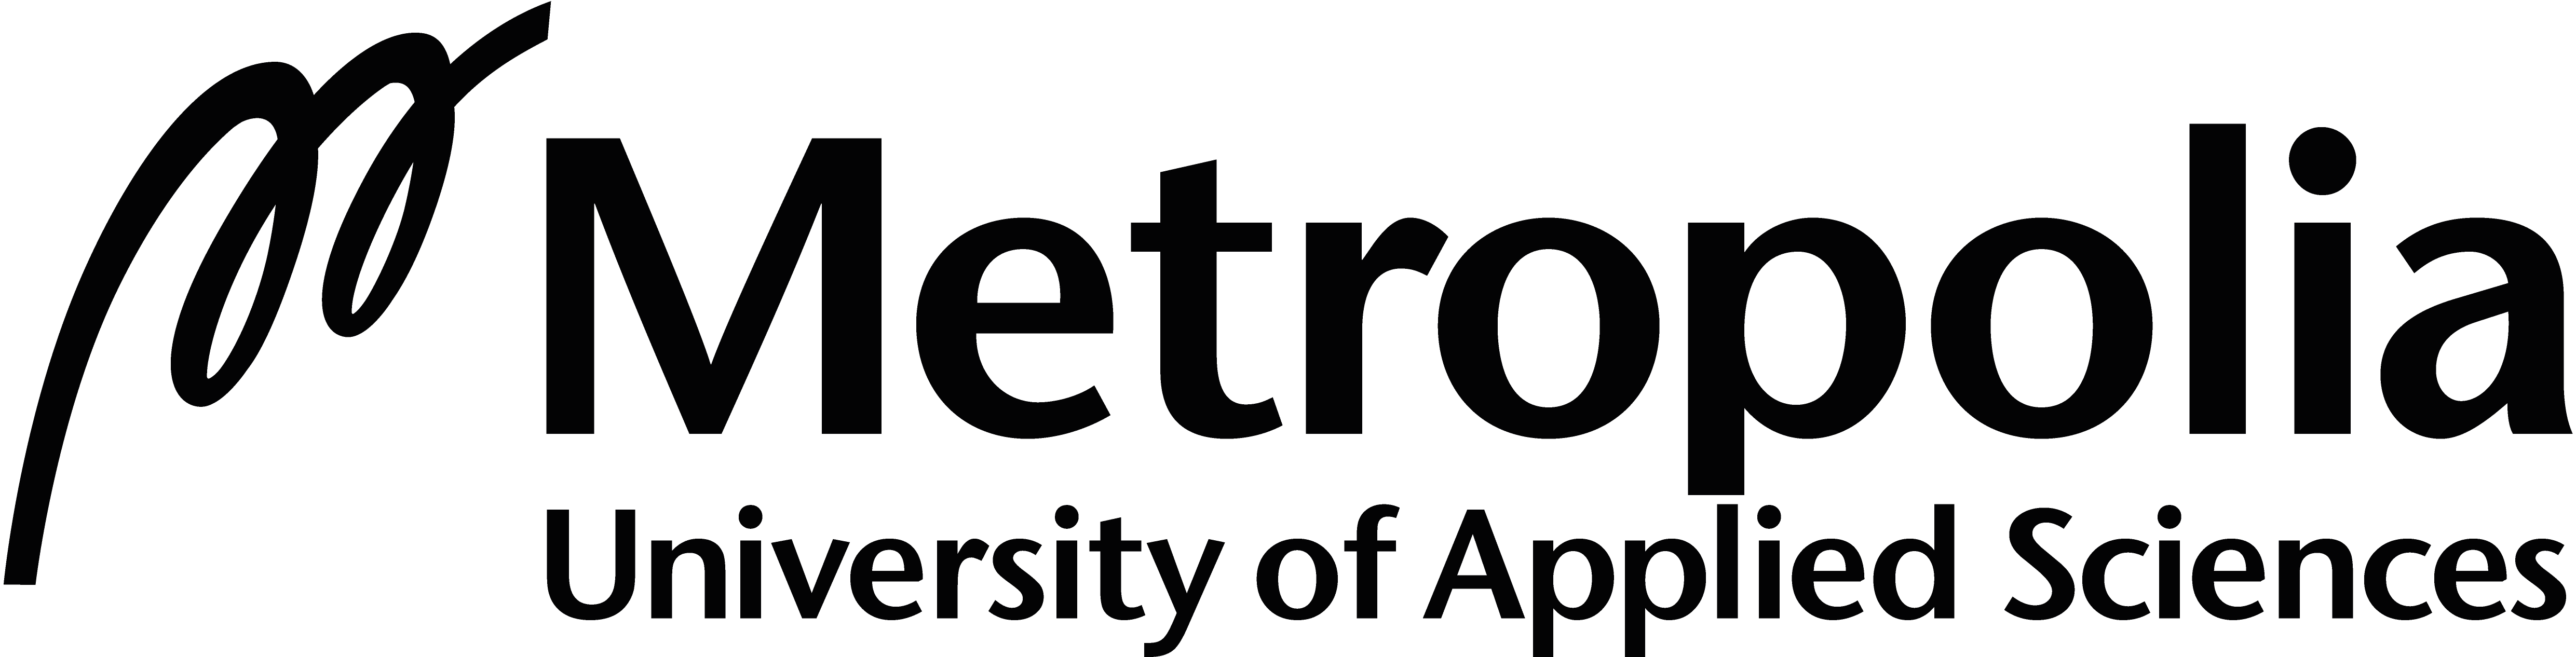 Metropolia University of Applied Sciences